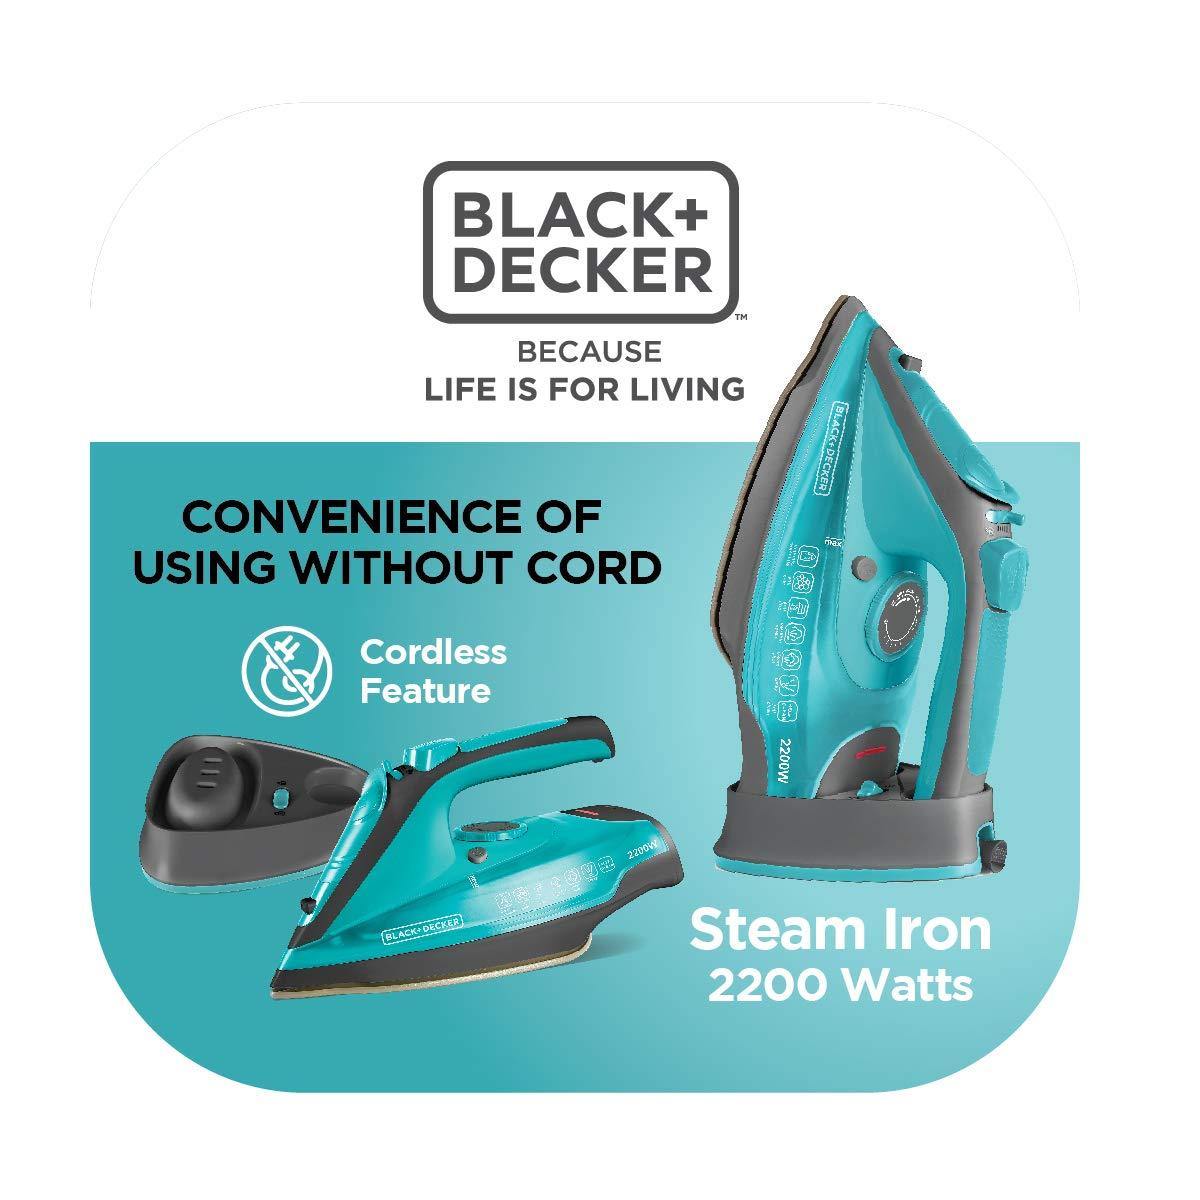 Black + Decker BD BXIR2202IN 2200 Watts Steam Iron Review - After 4 months  